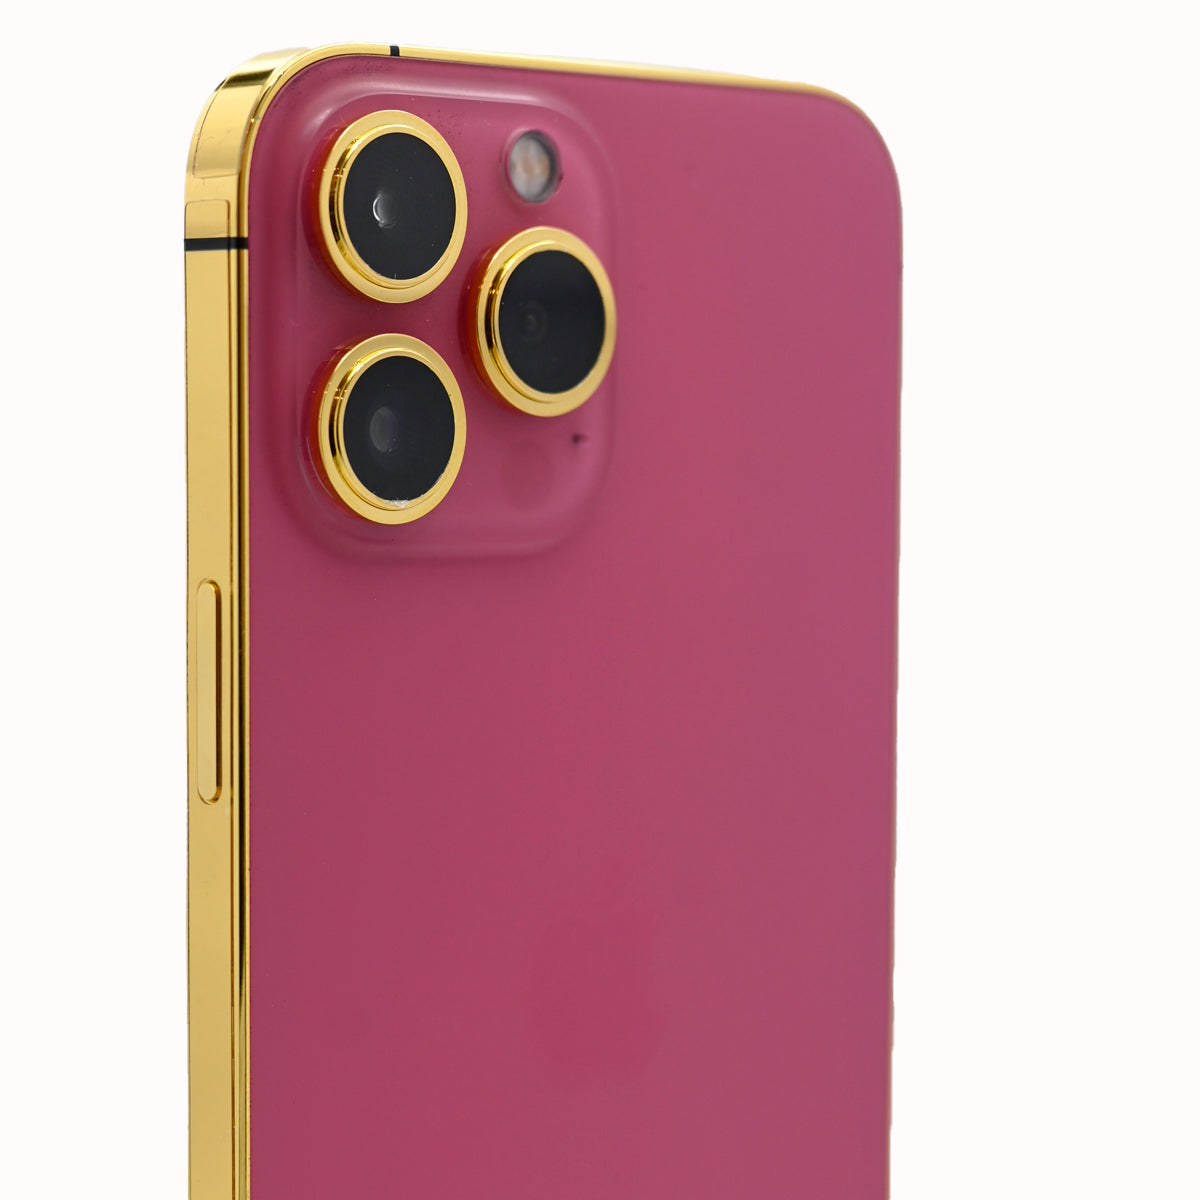 Caviar Luxury 24k Gold Frame Customized iPhone13 Pro 512 GB Frame Pink